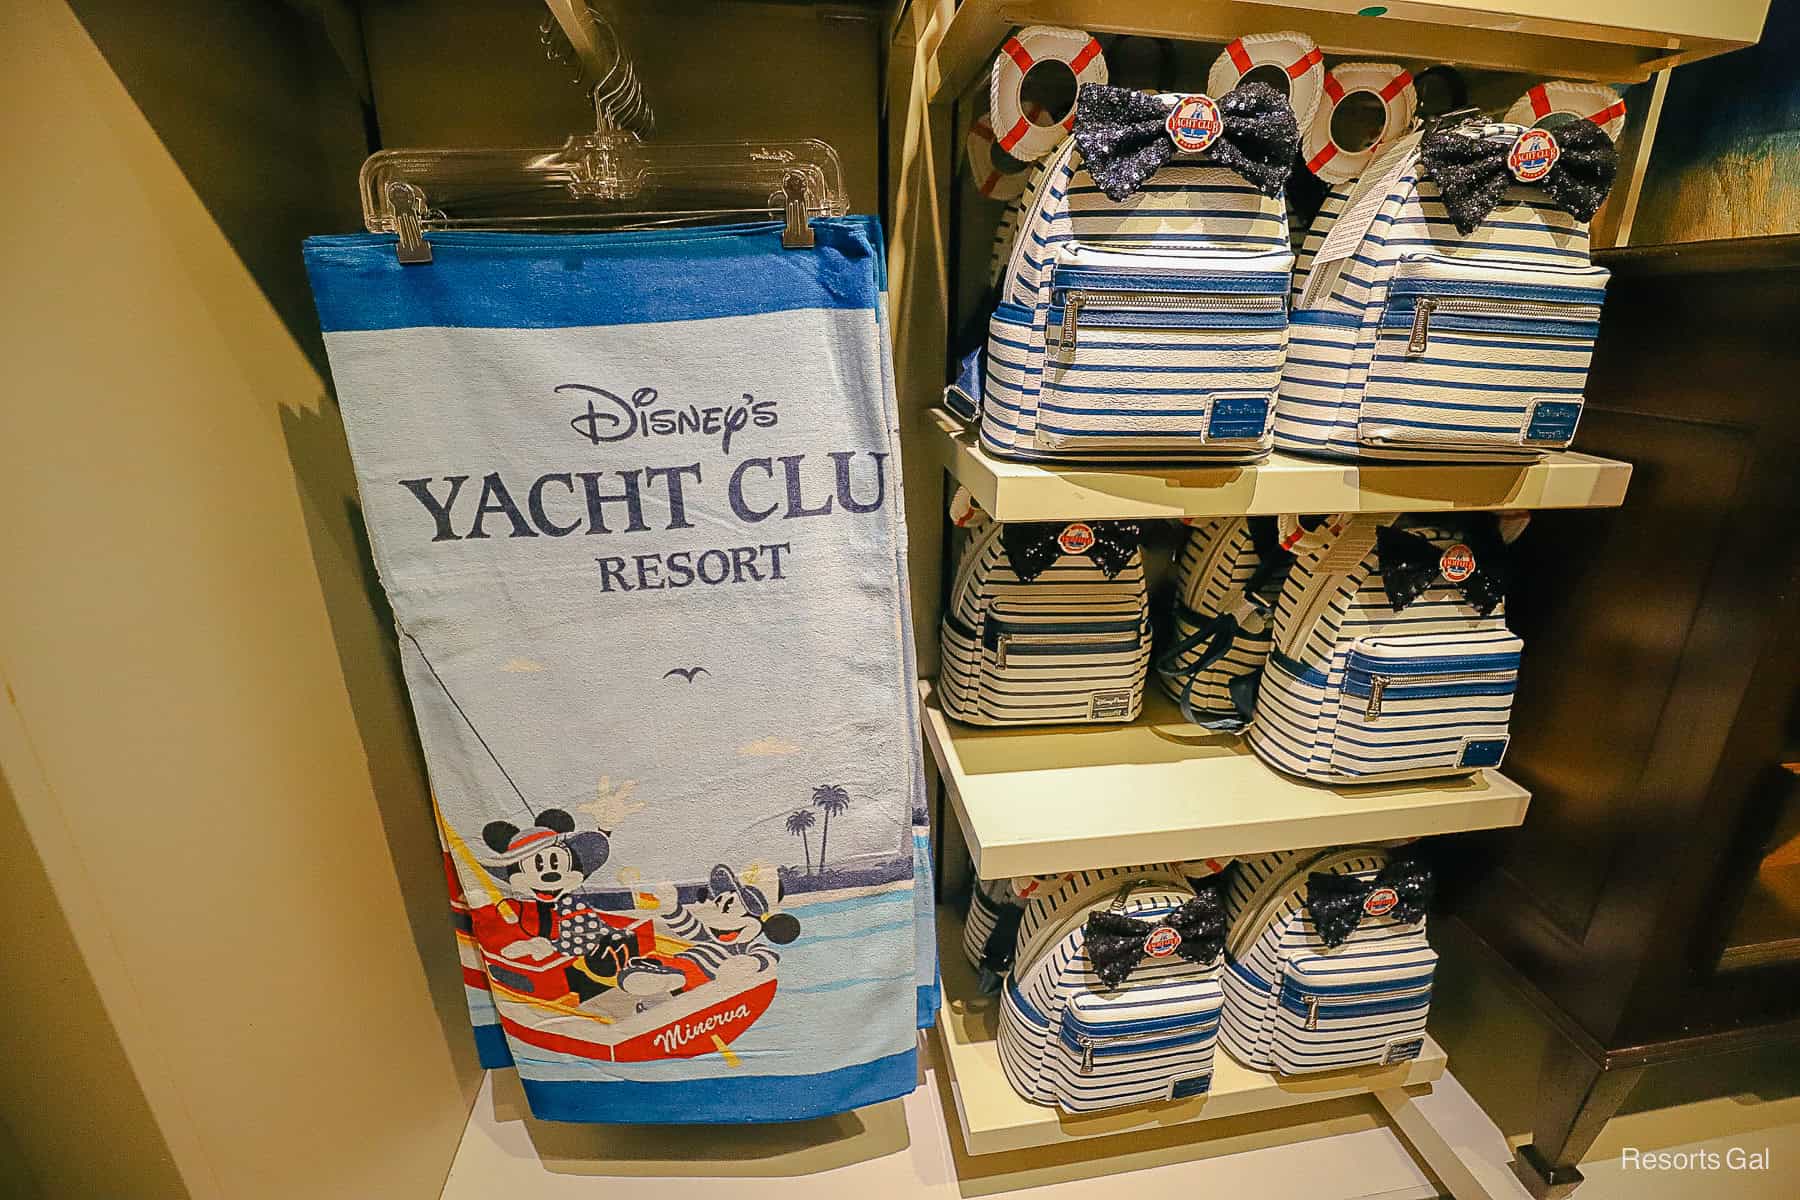 Yacht Club branded beach towel 